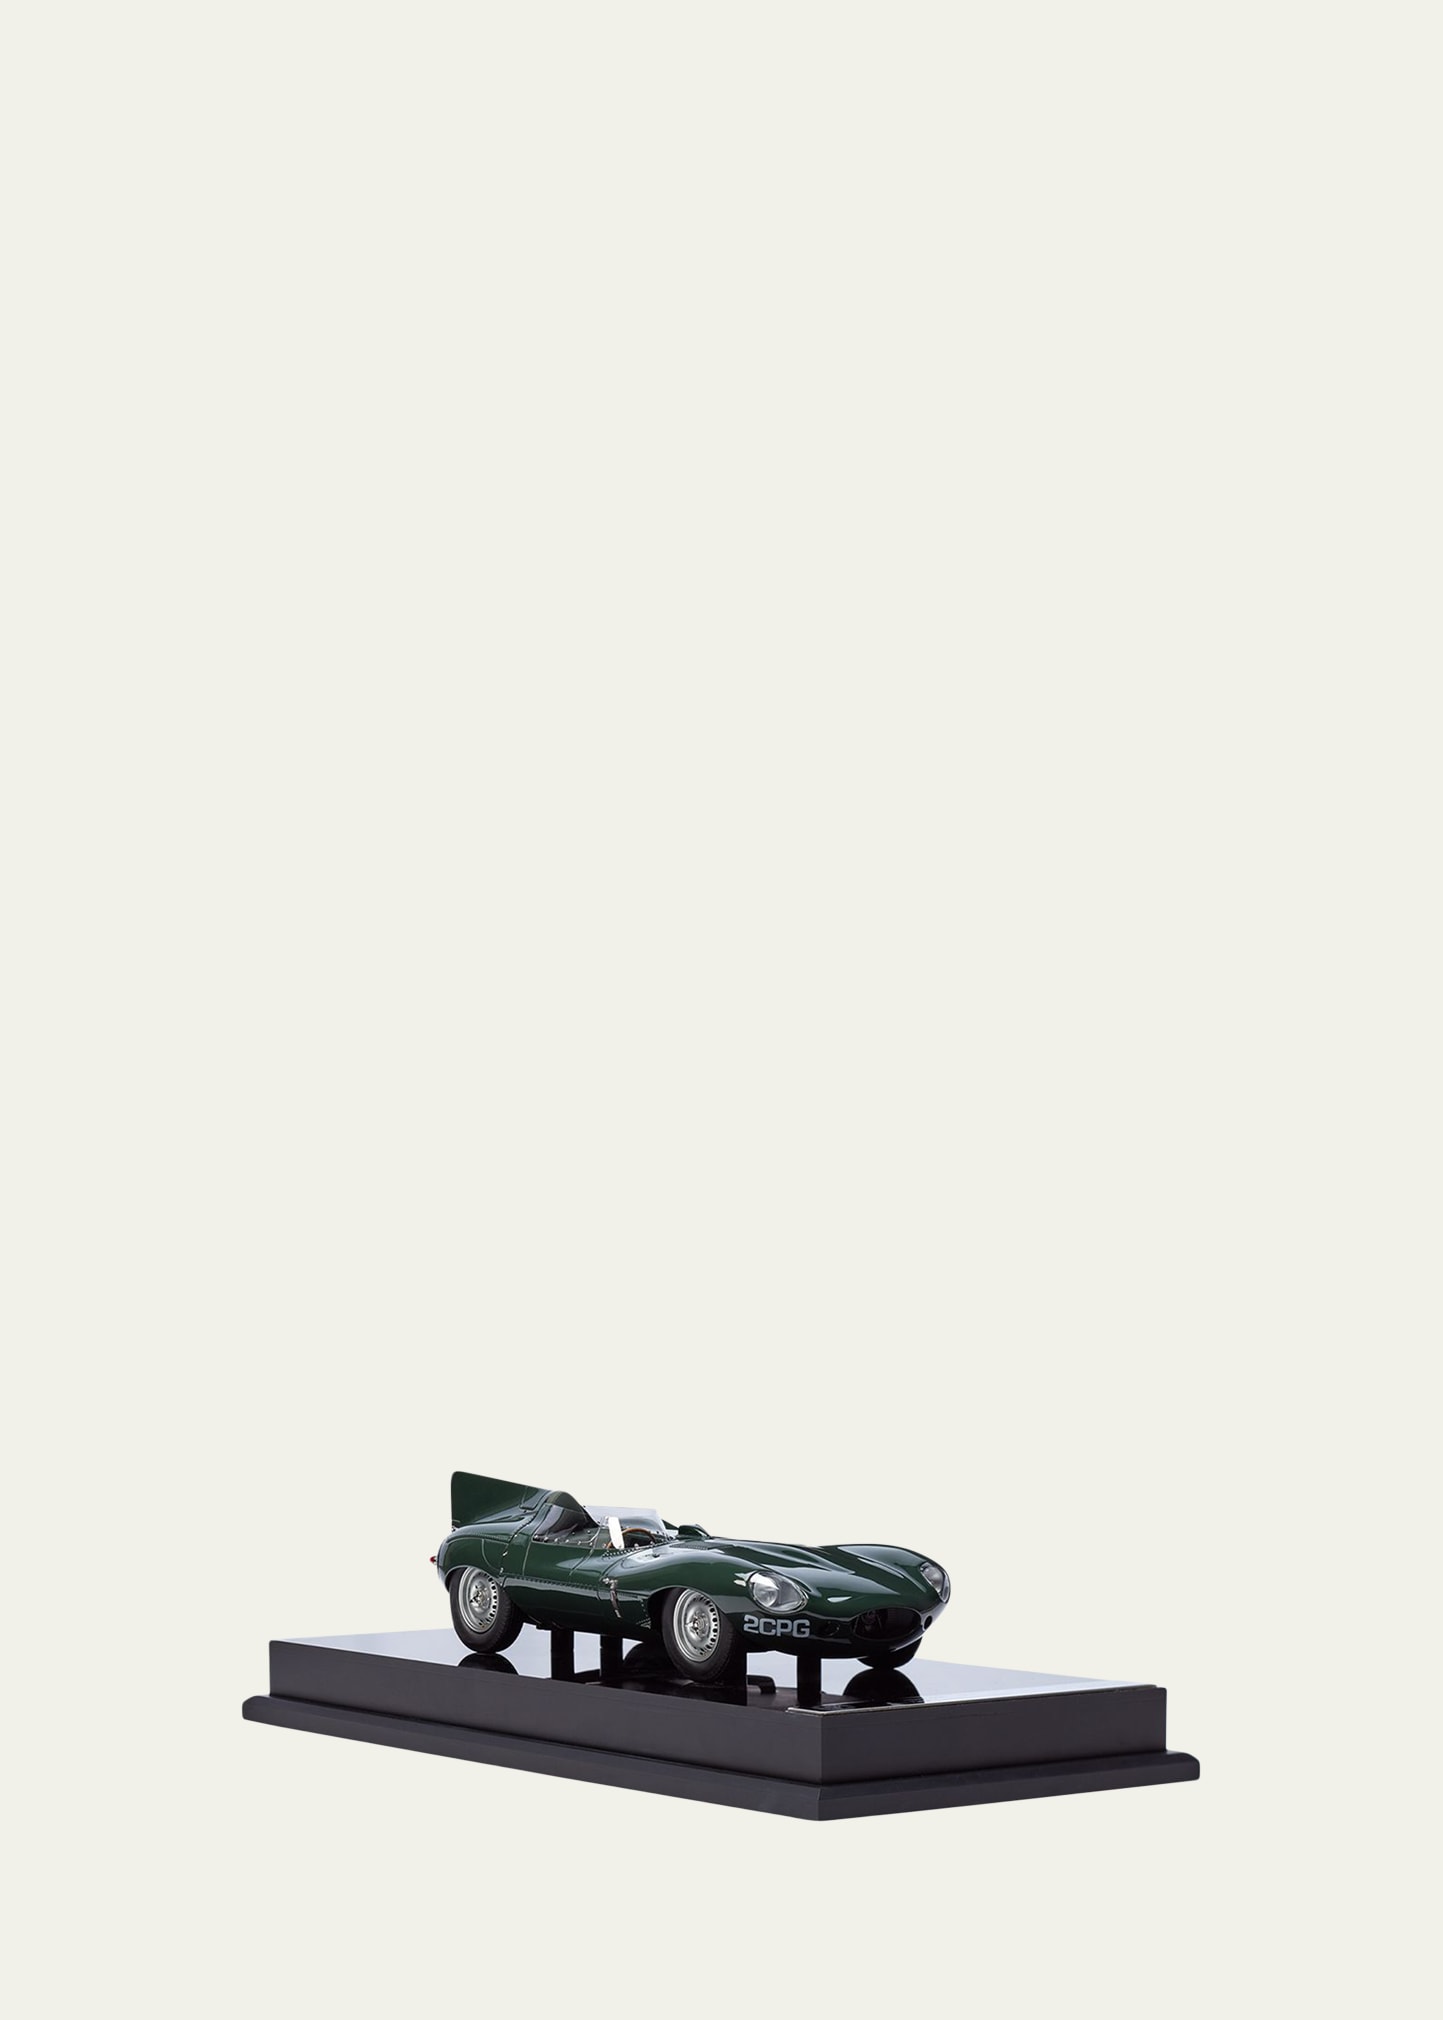 Ralph Lauren's 1955 Jaguar XKD Miniature Scaled Car Replica